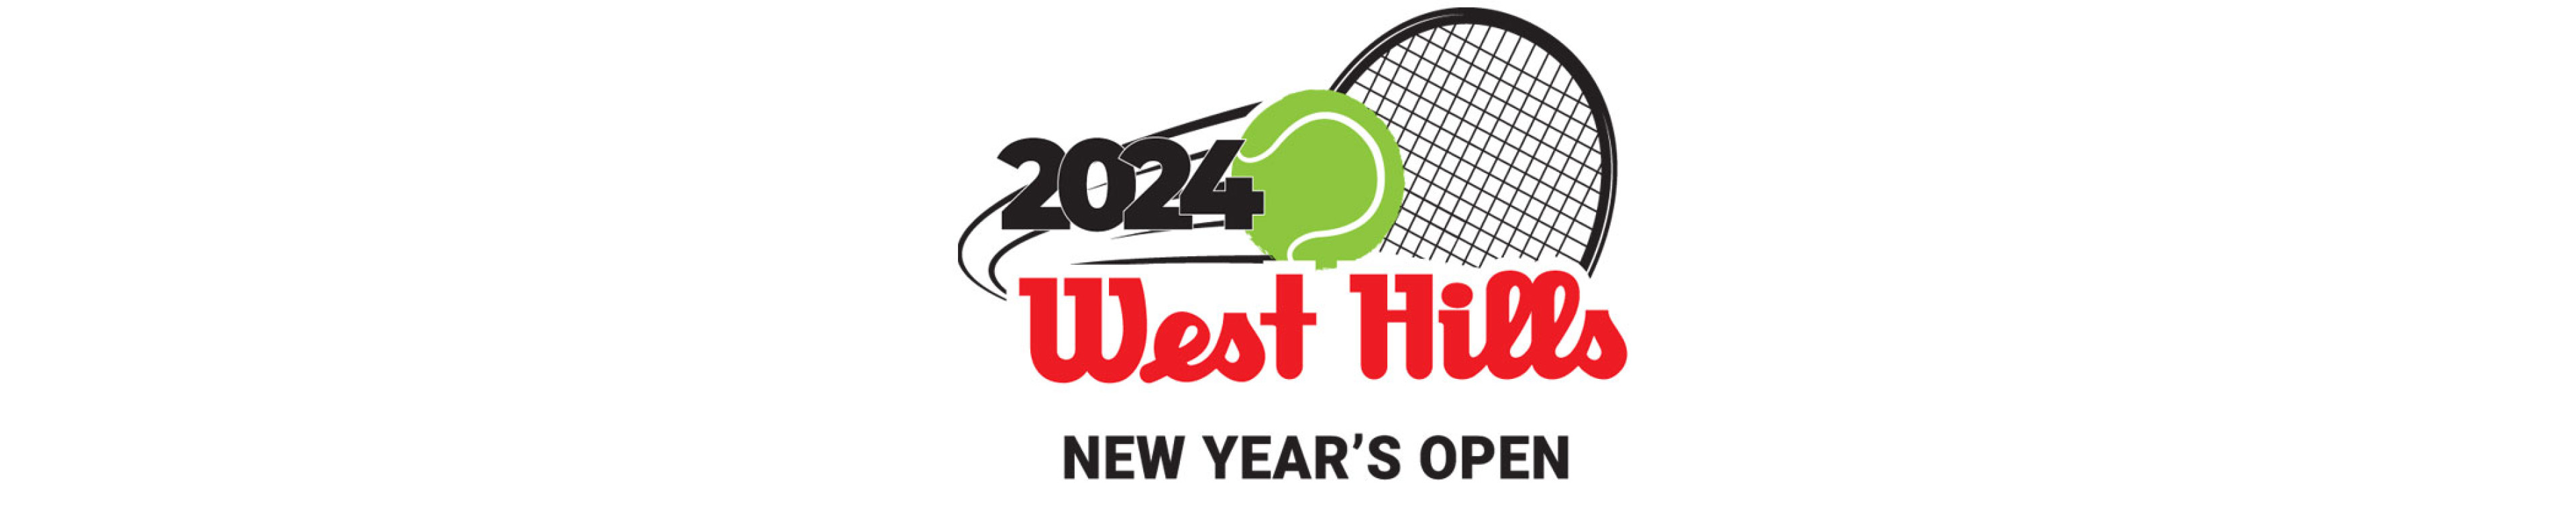 New Year's Open Logo Banner